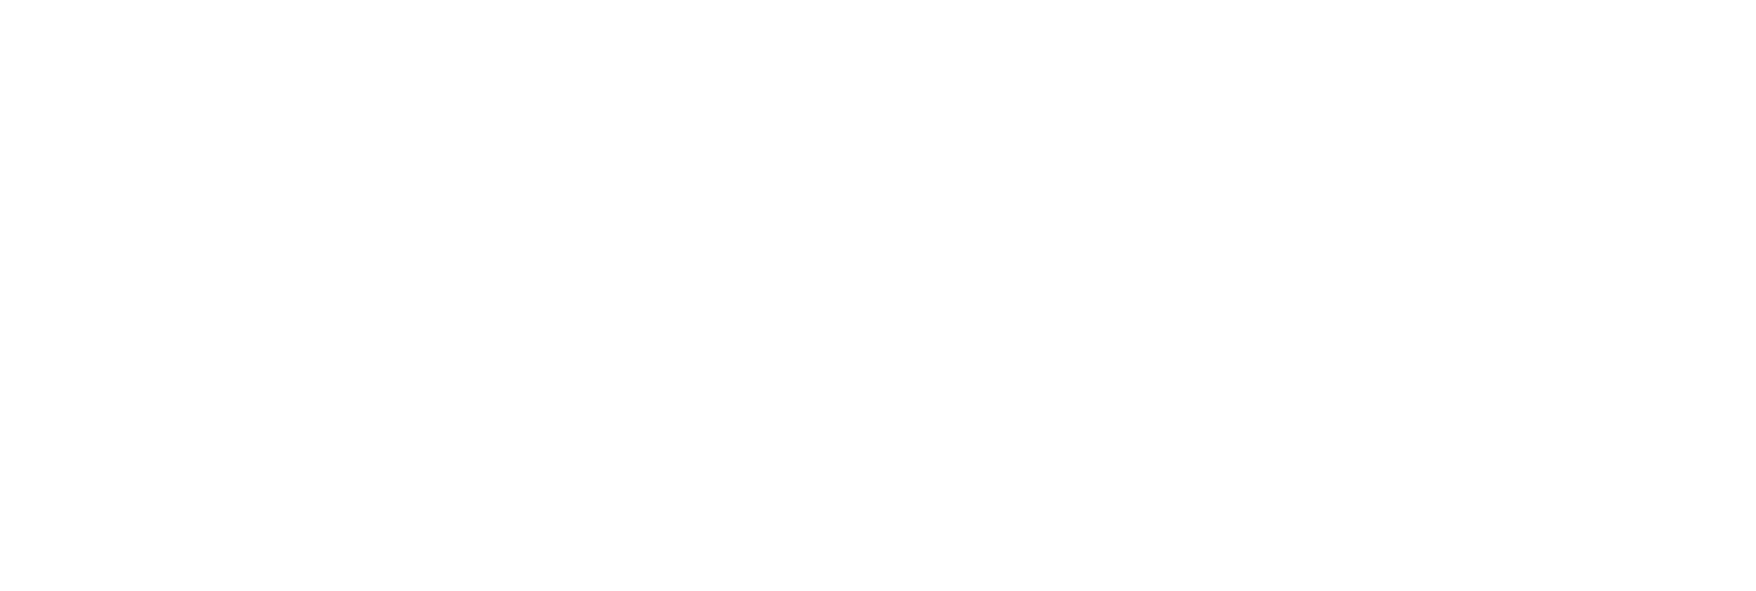 nyhav. logo